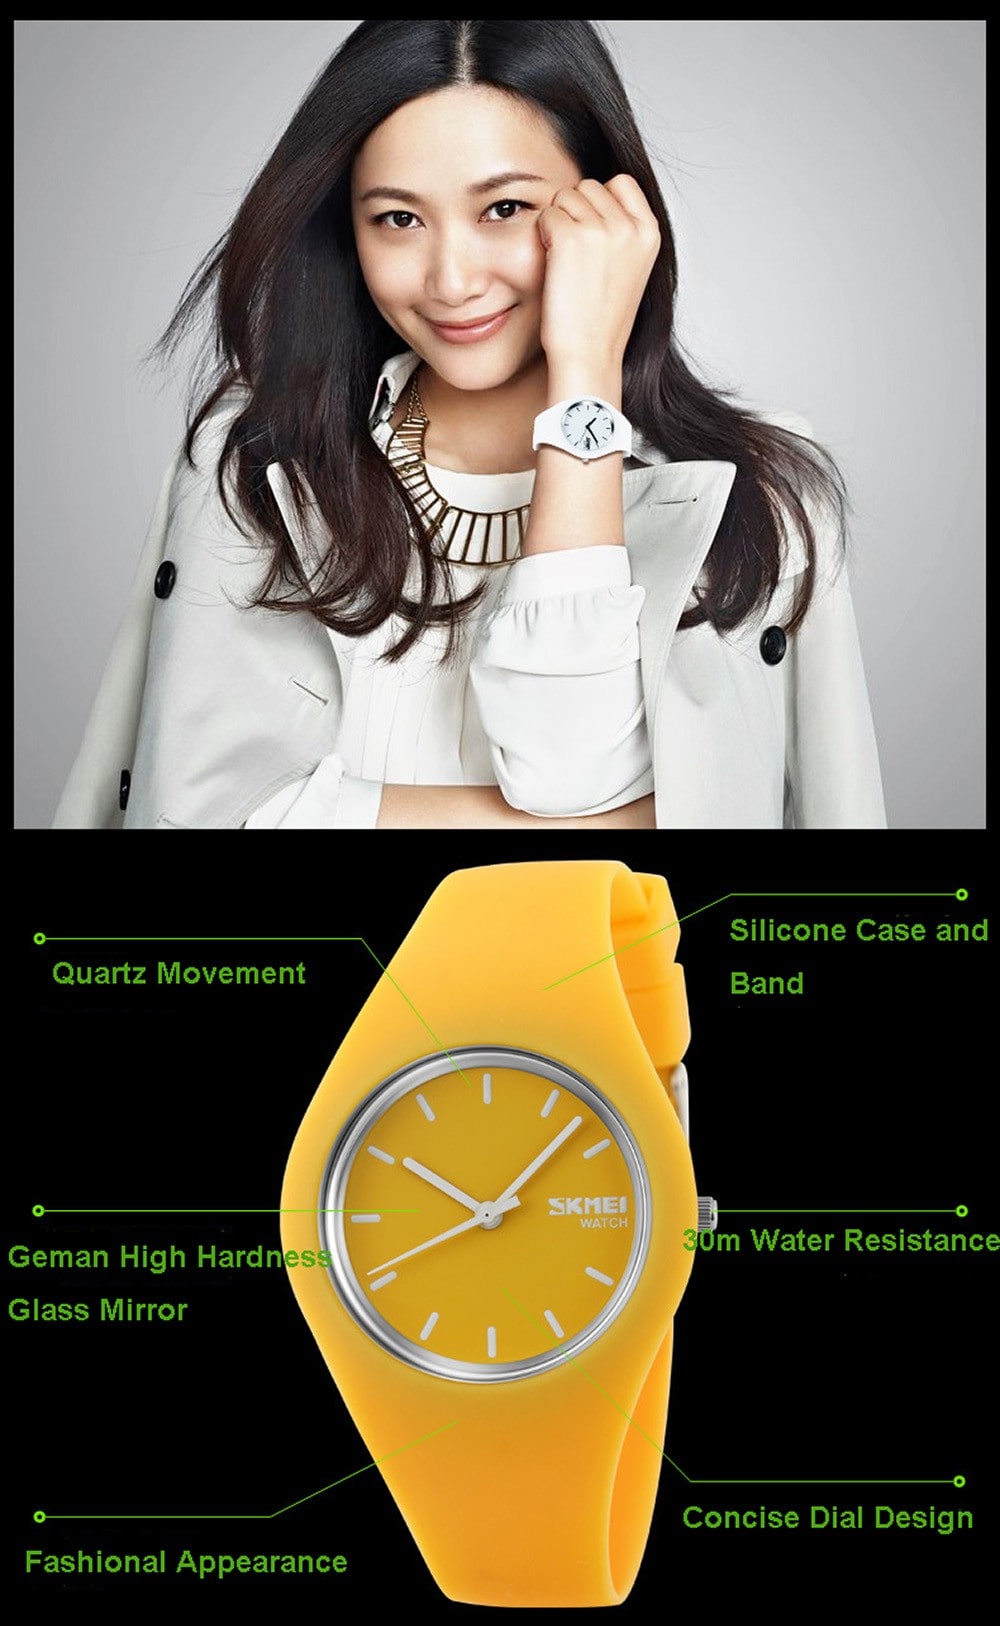 Skmei 9068 Sport Quartz Watch Silicon Strap Wristwatch for Men Women- White and Black